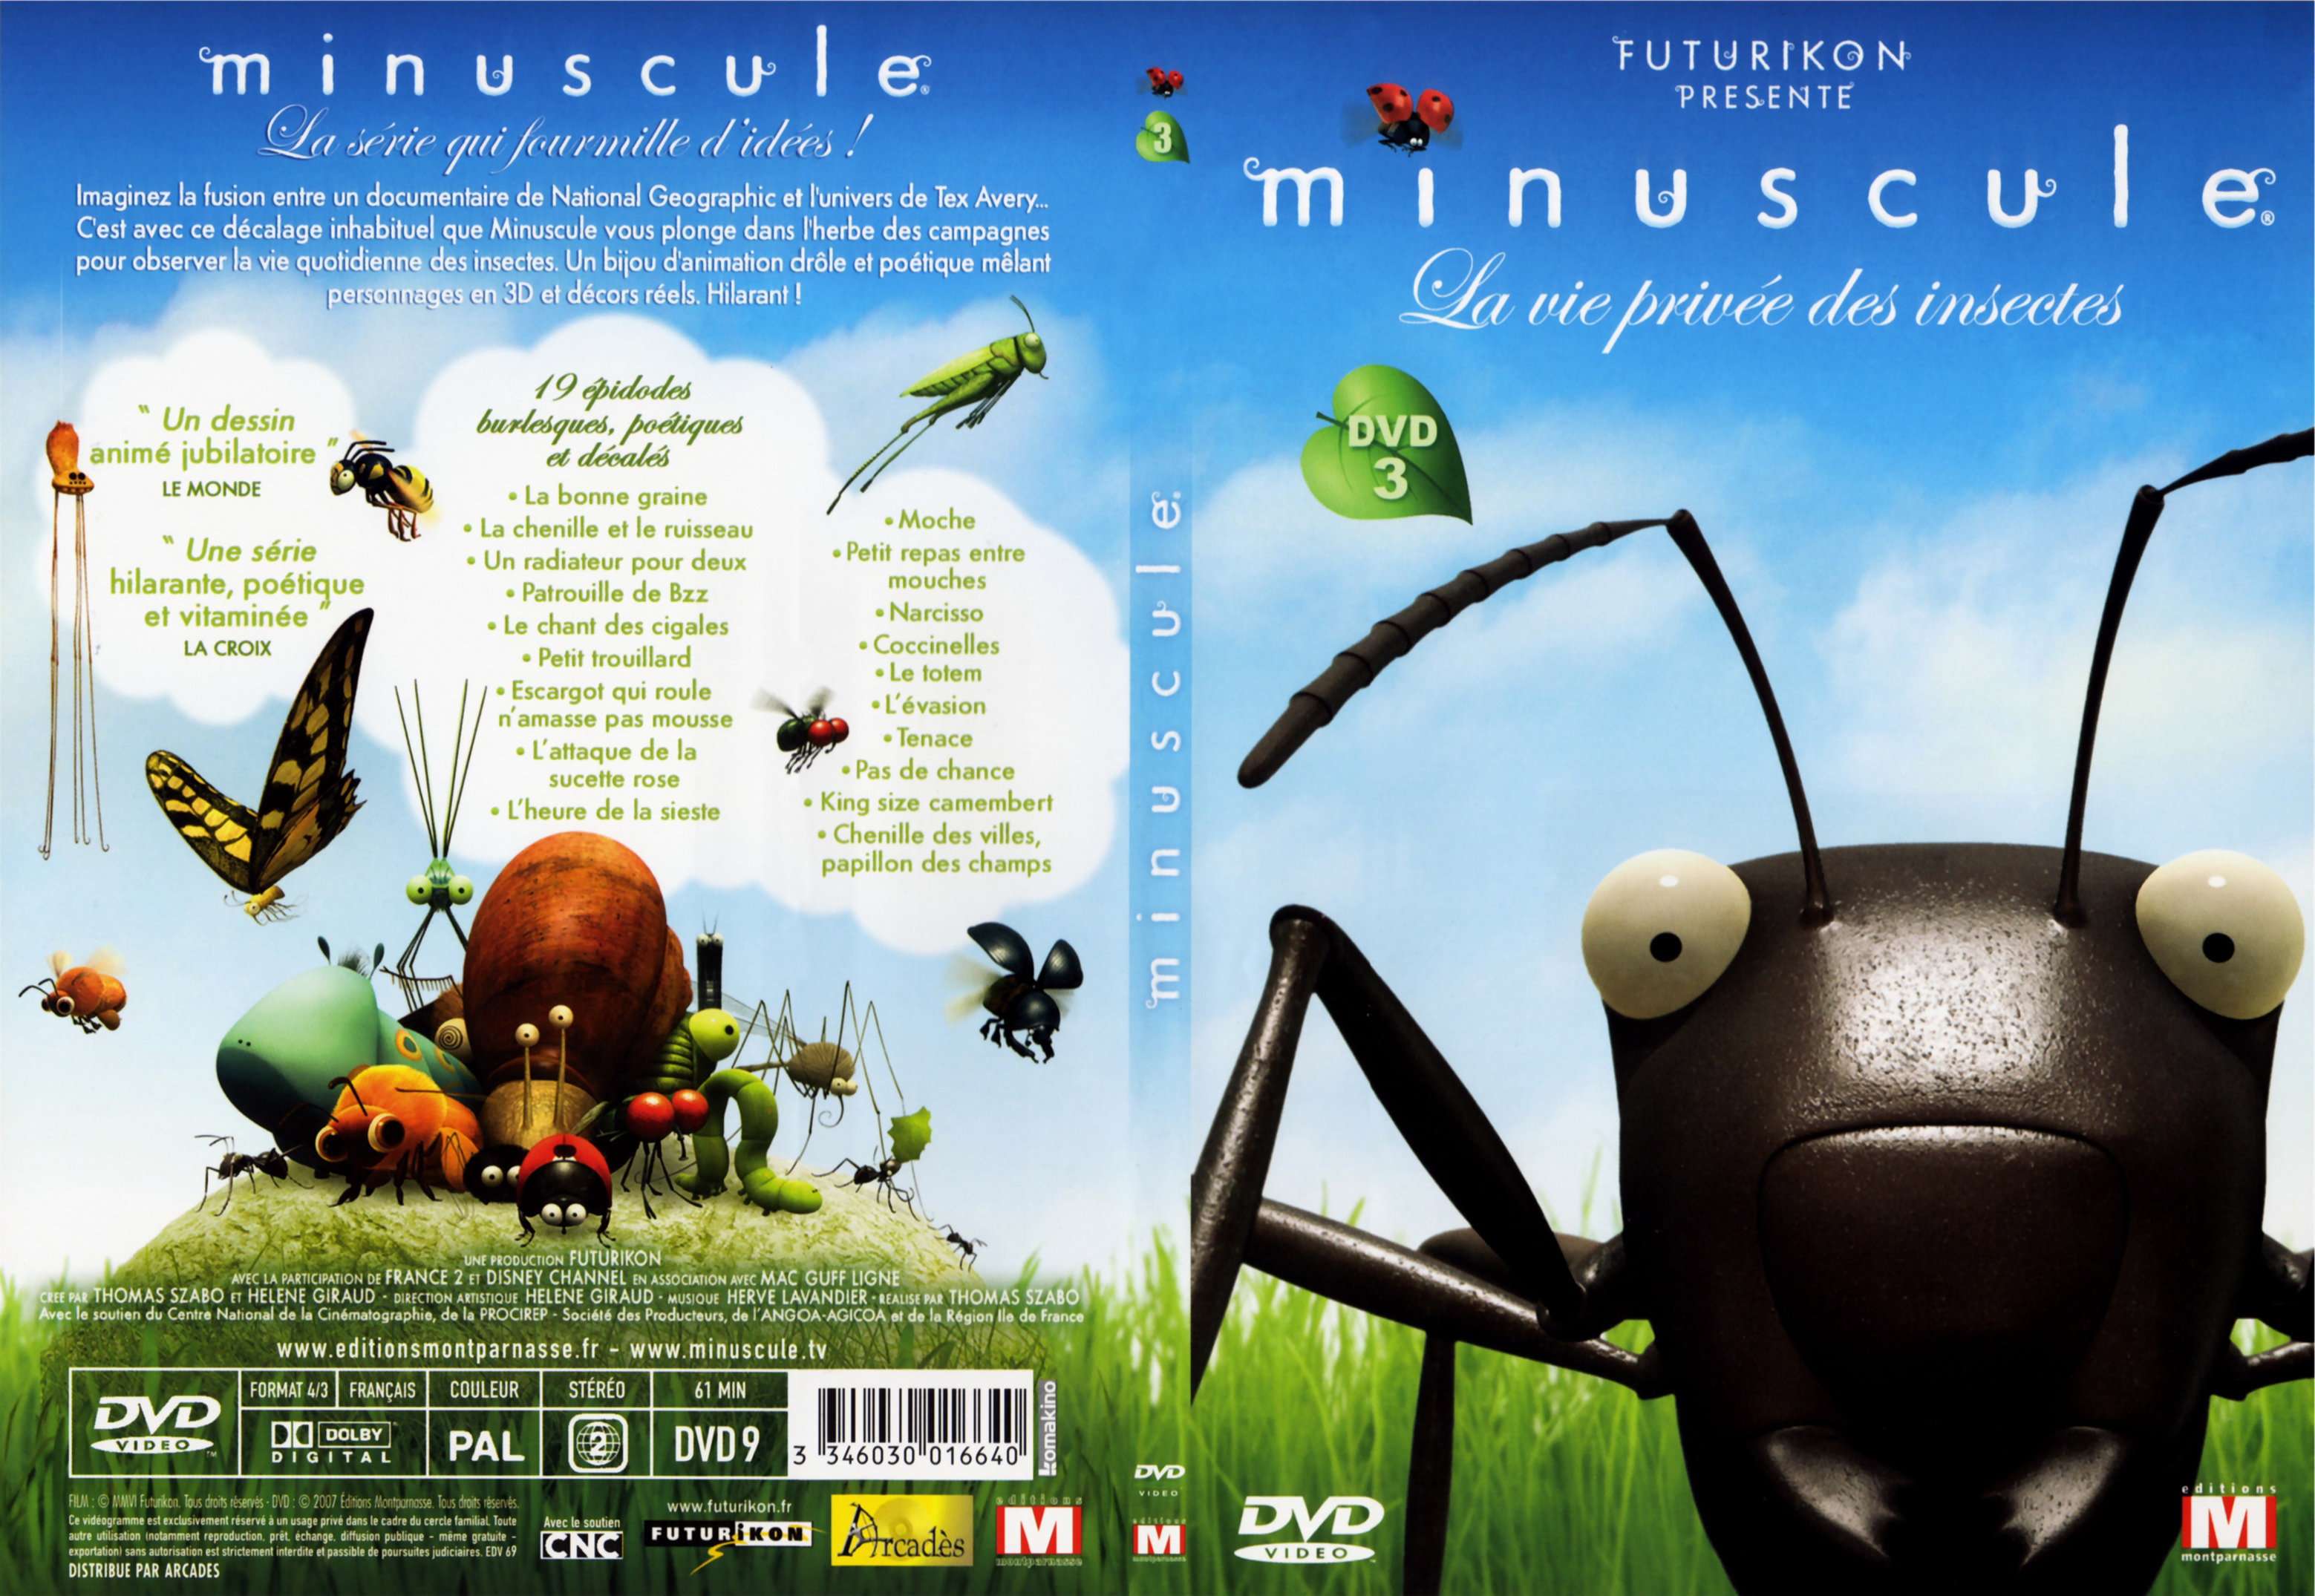 Jaquette DVD Minuscule DVD 3